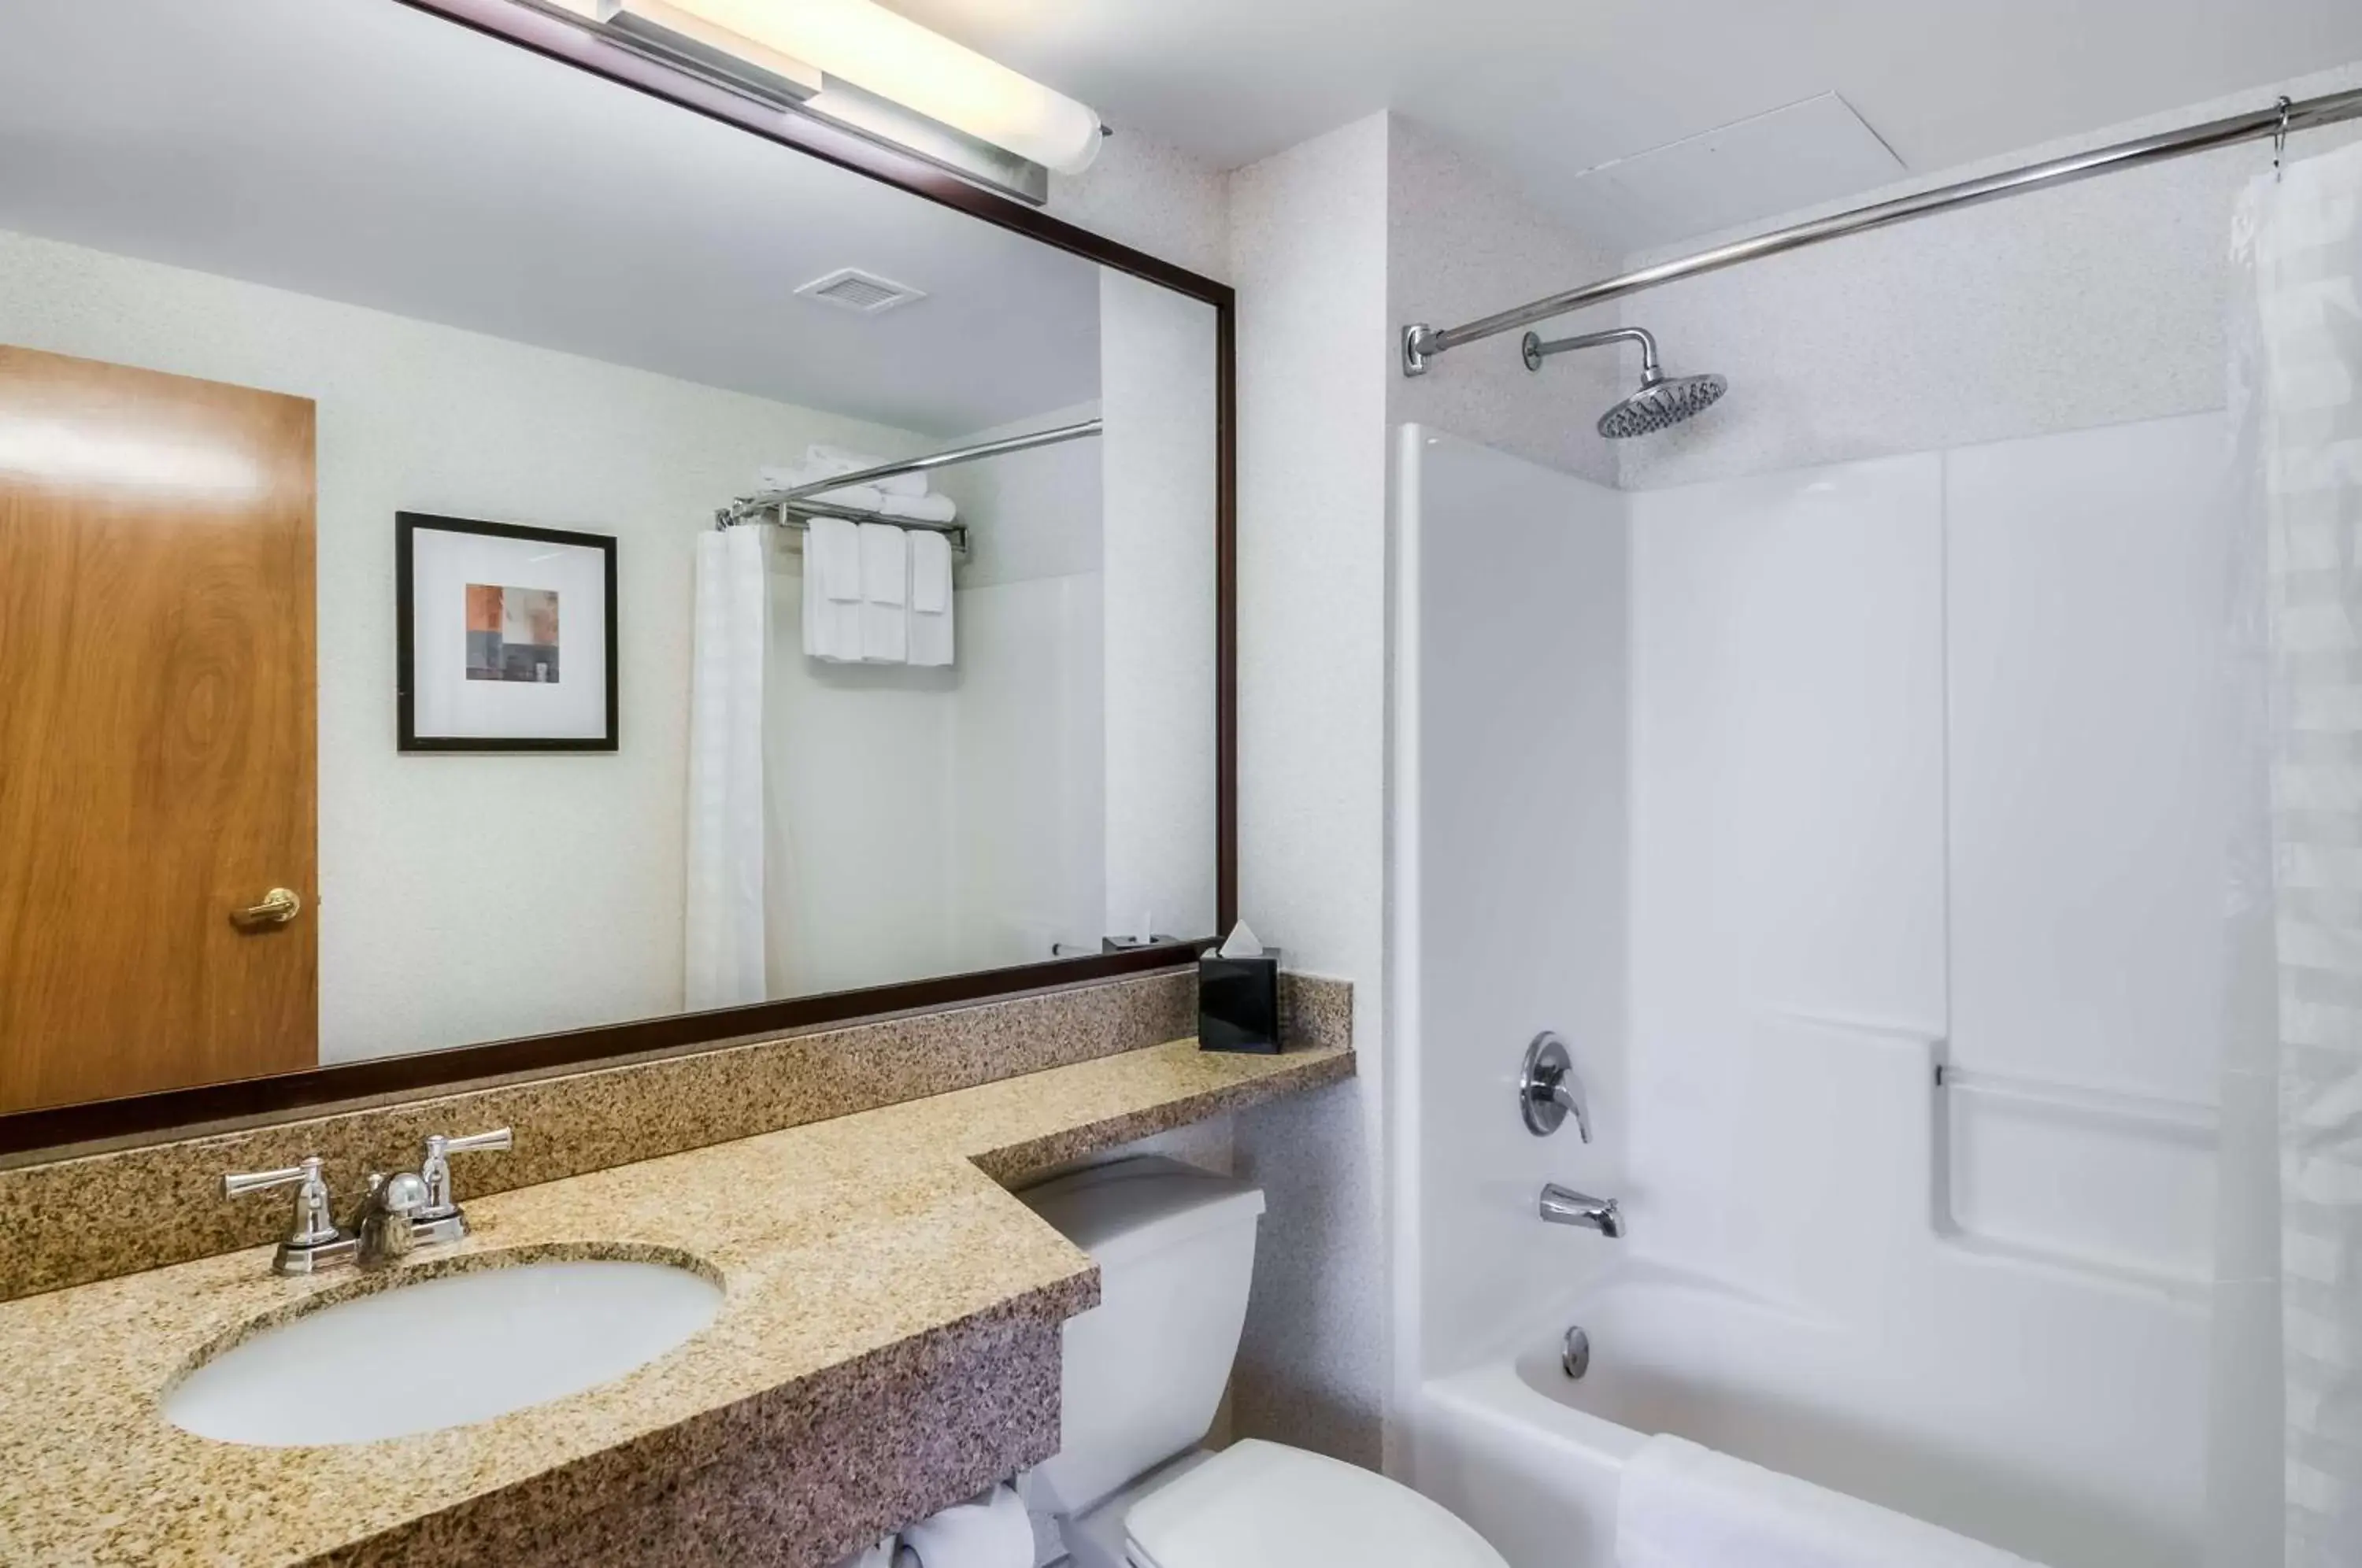 Photo of the whole room, Bathroom in Hyatt House Chicago Schaumburg